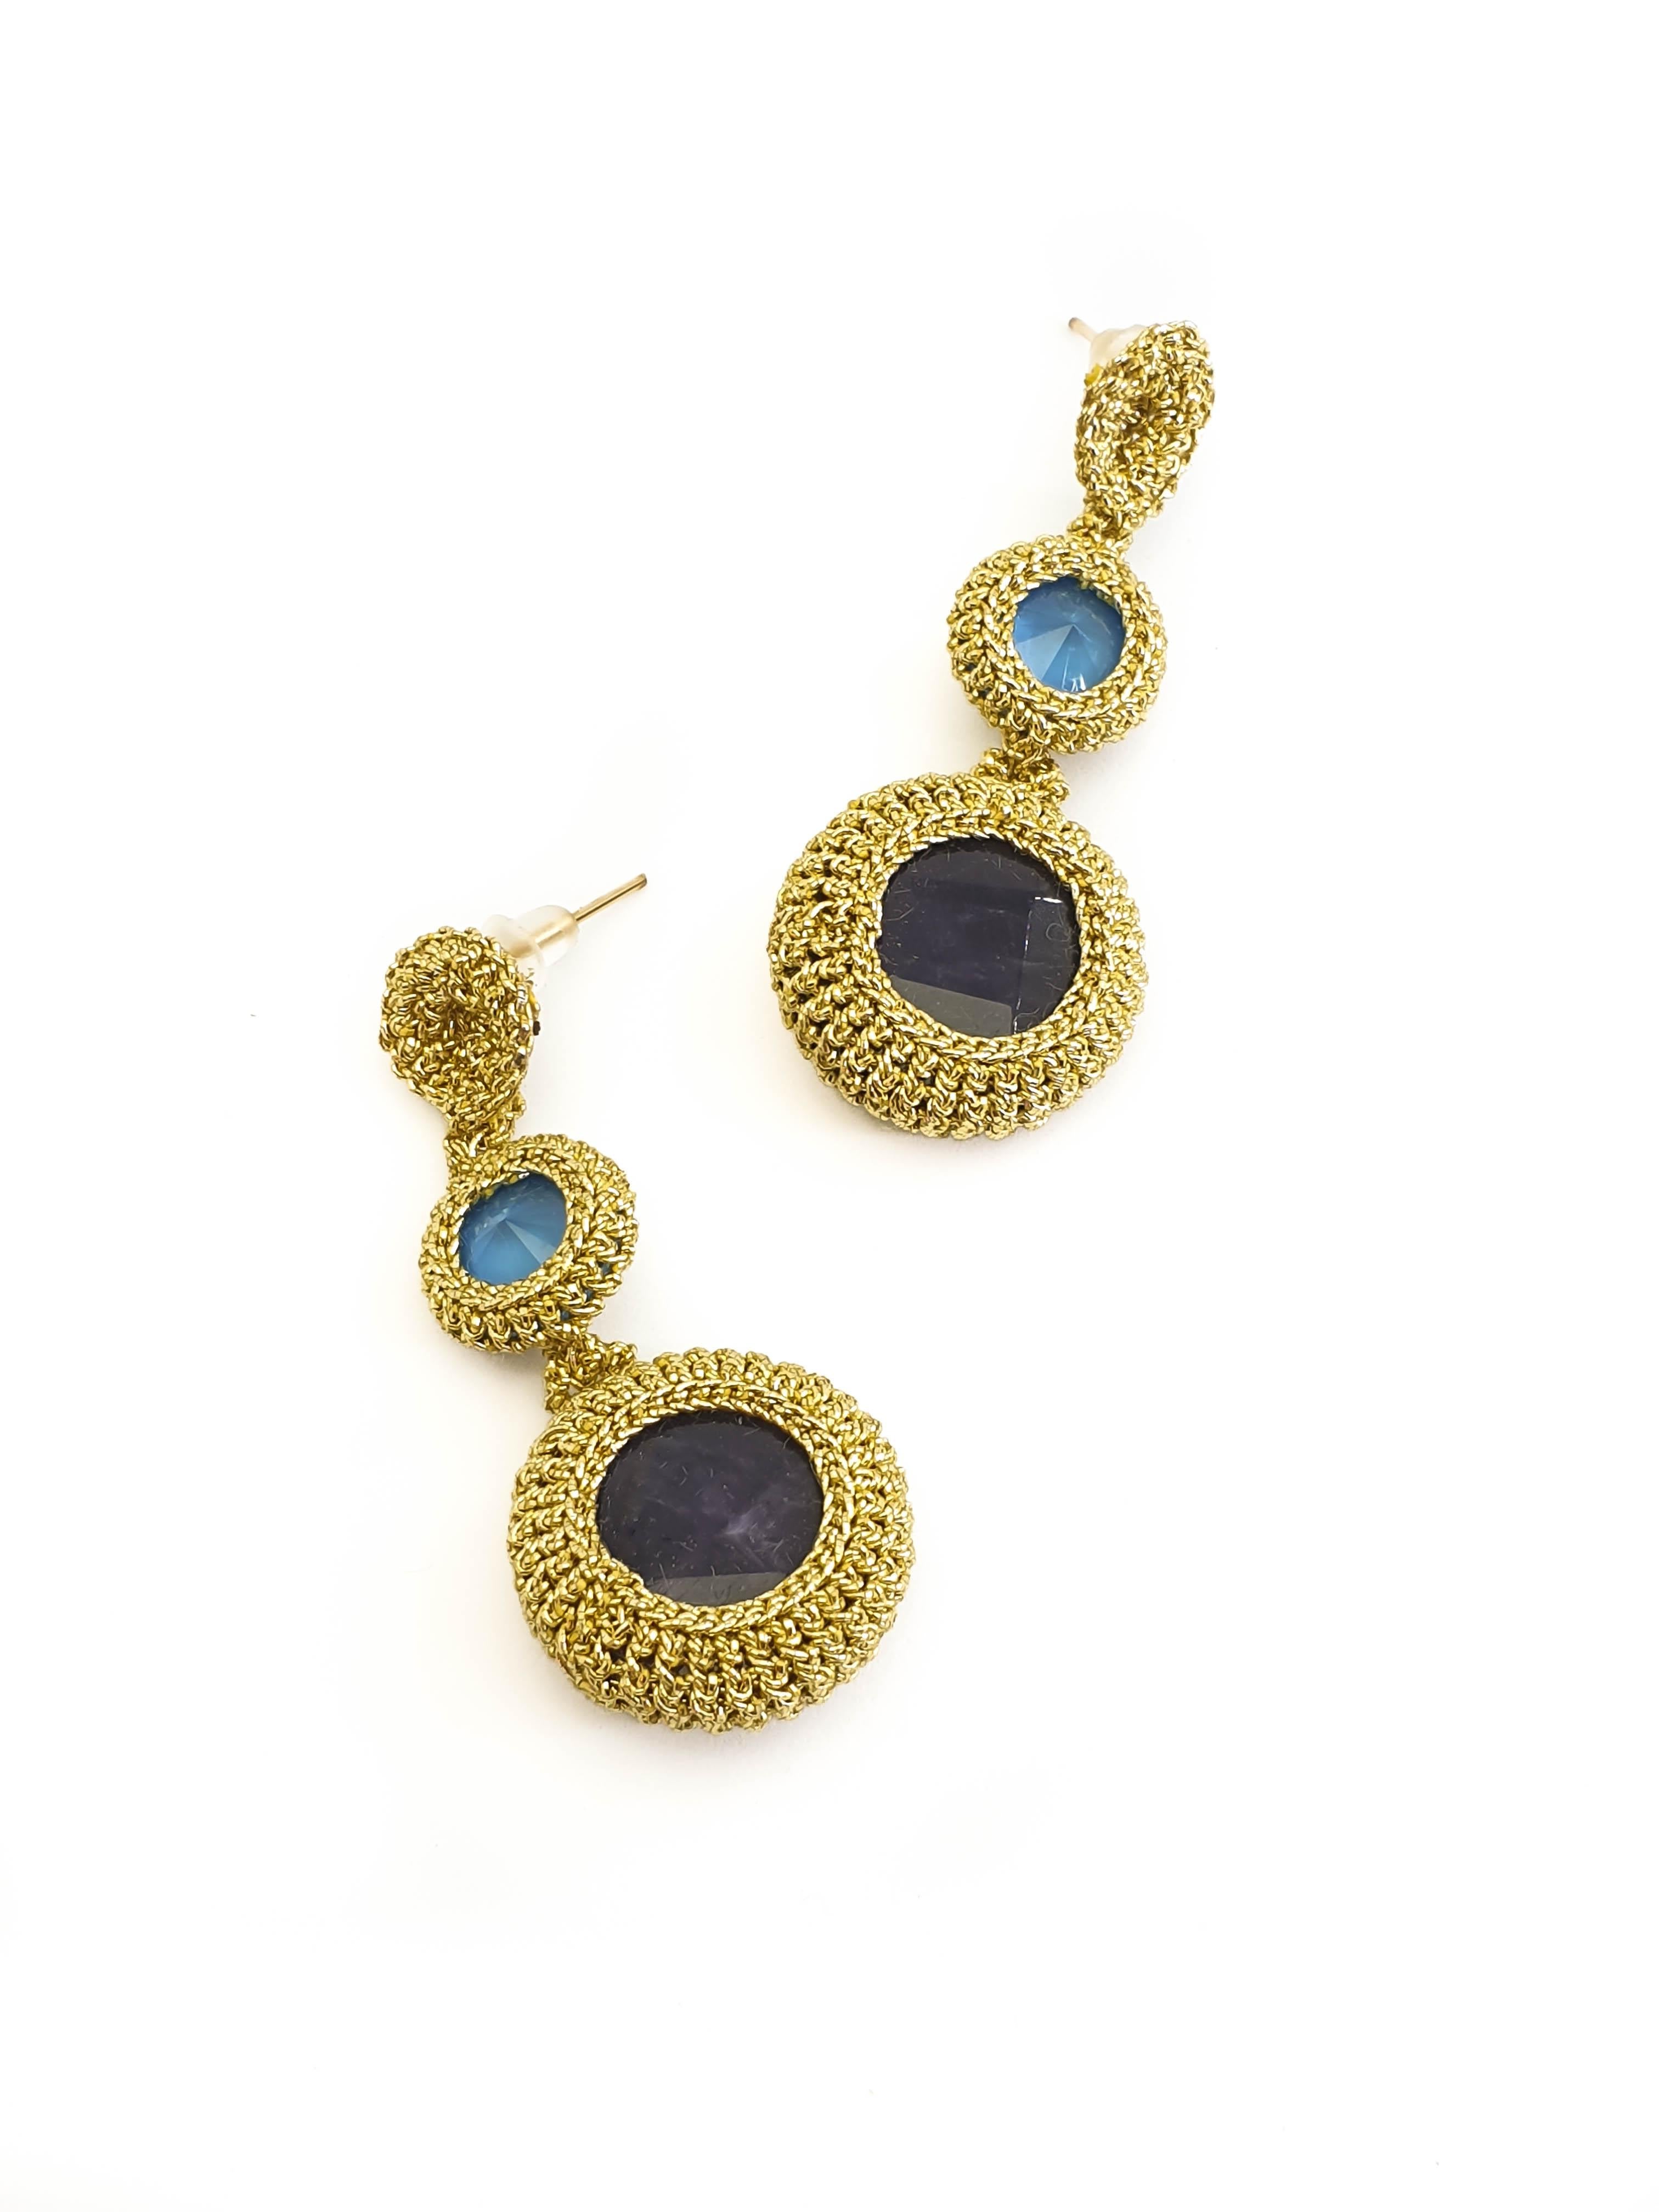 Gold Color Crochet Thread Drop Earrings Amethyst Blue Vintage Swarovski Crystals In New Condition For Sale In Kfar Saba, IL